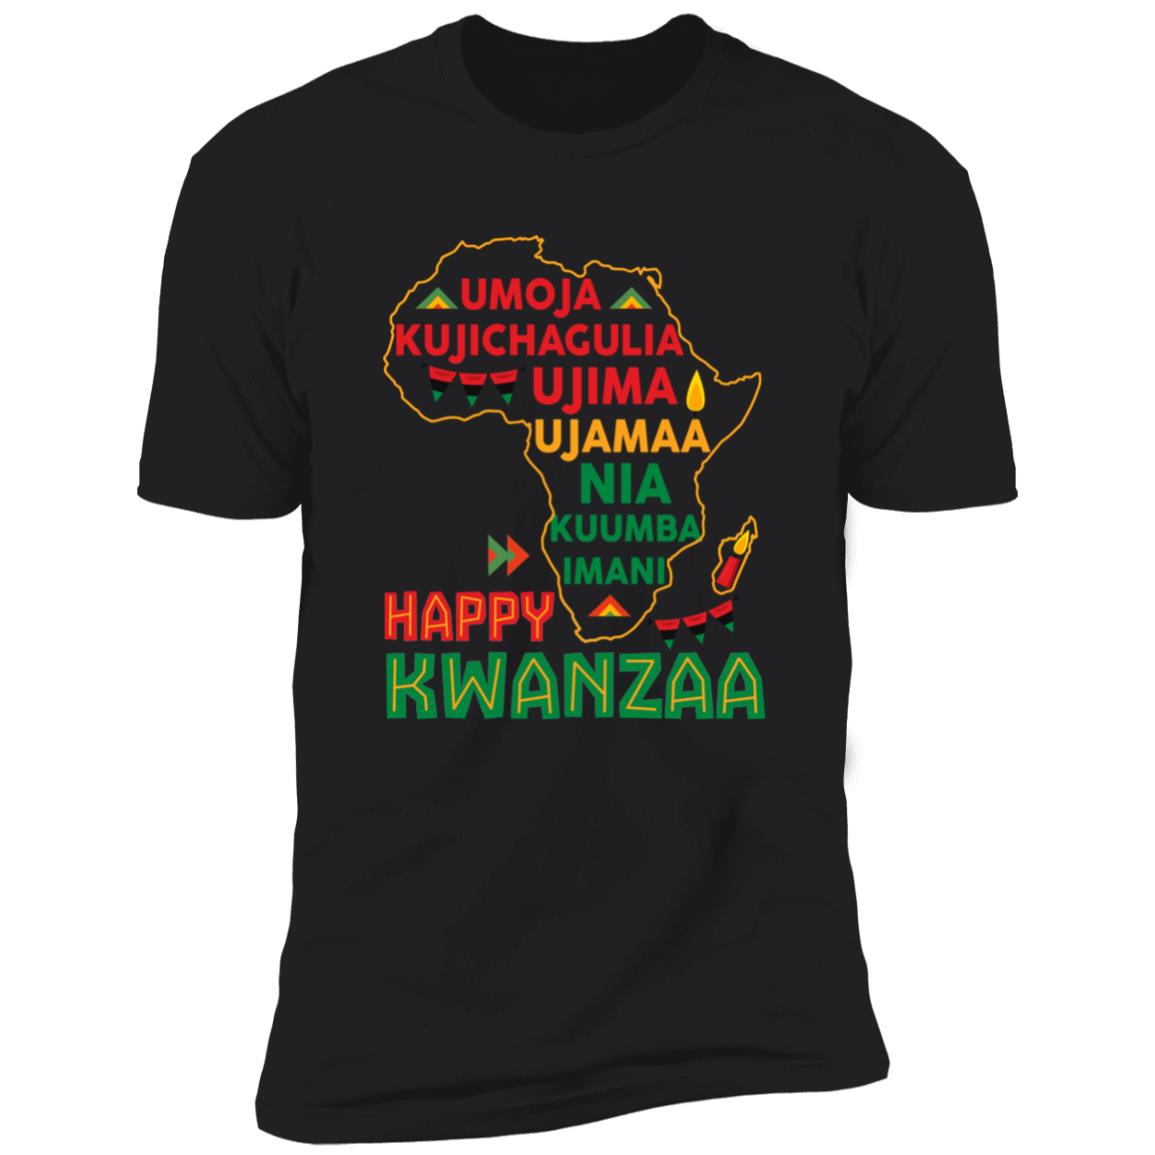 Kwanzaa Africa Map 7 Principles T-Shirt Apparel Gearment Premium T-Shirt Black X-Small